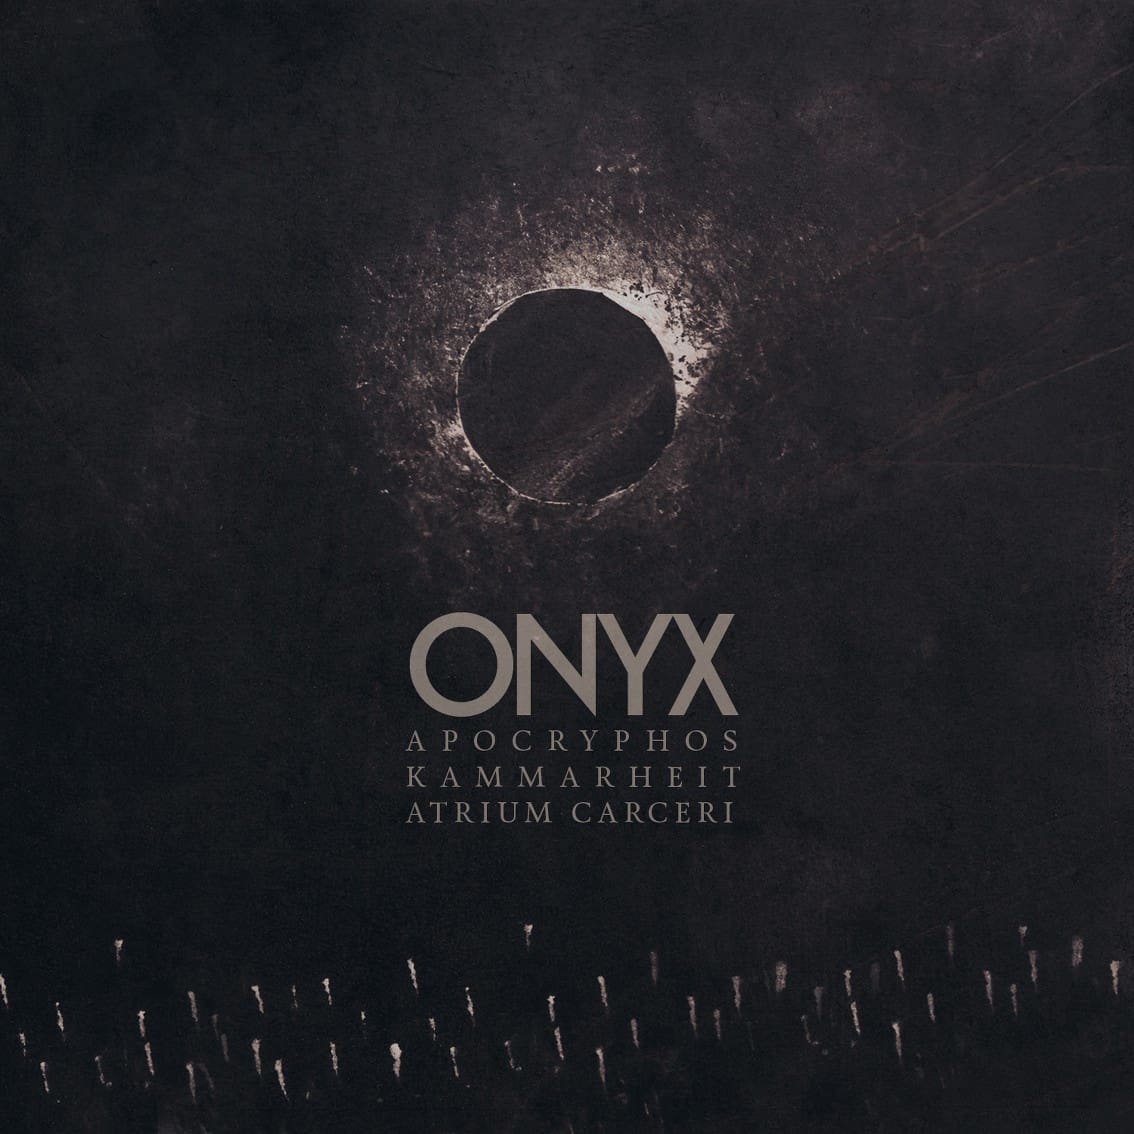 Atrium Carceri teams up with Apocryphos and Kammarheit for the album Onyx